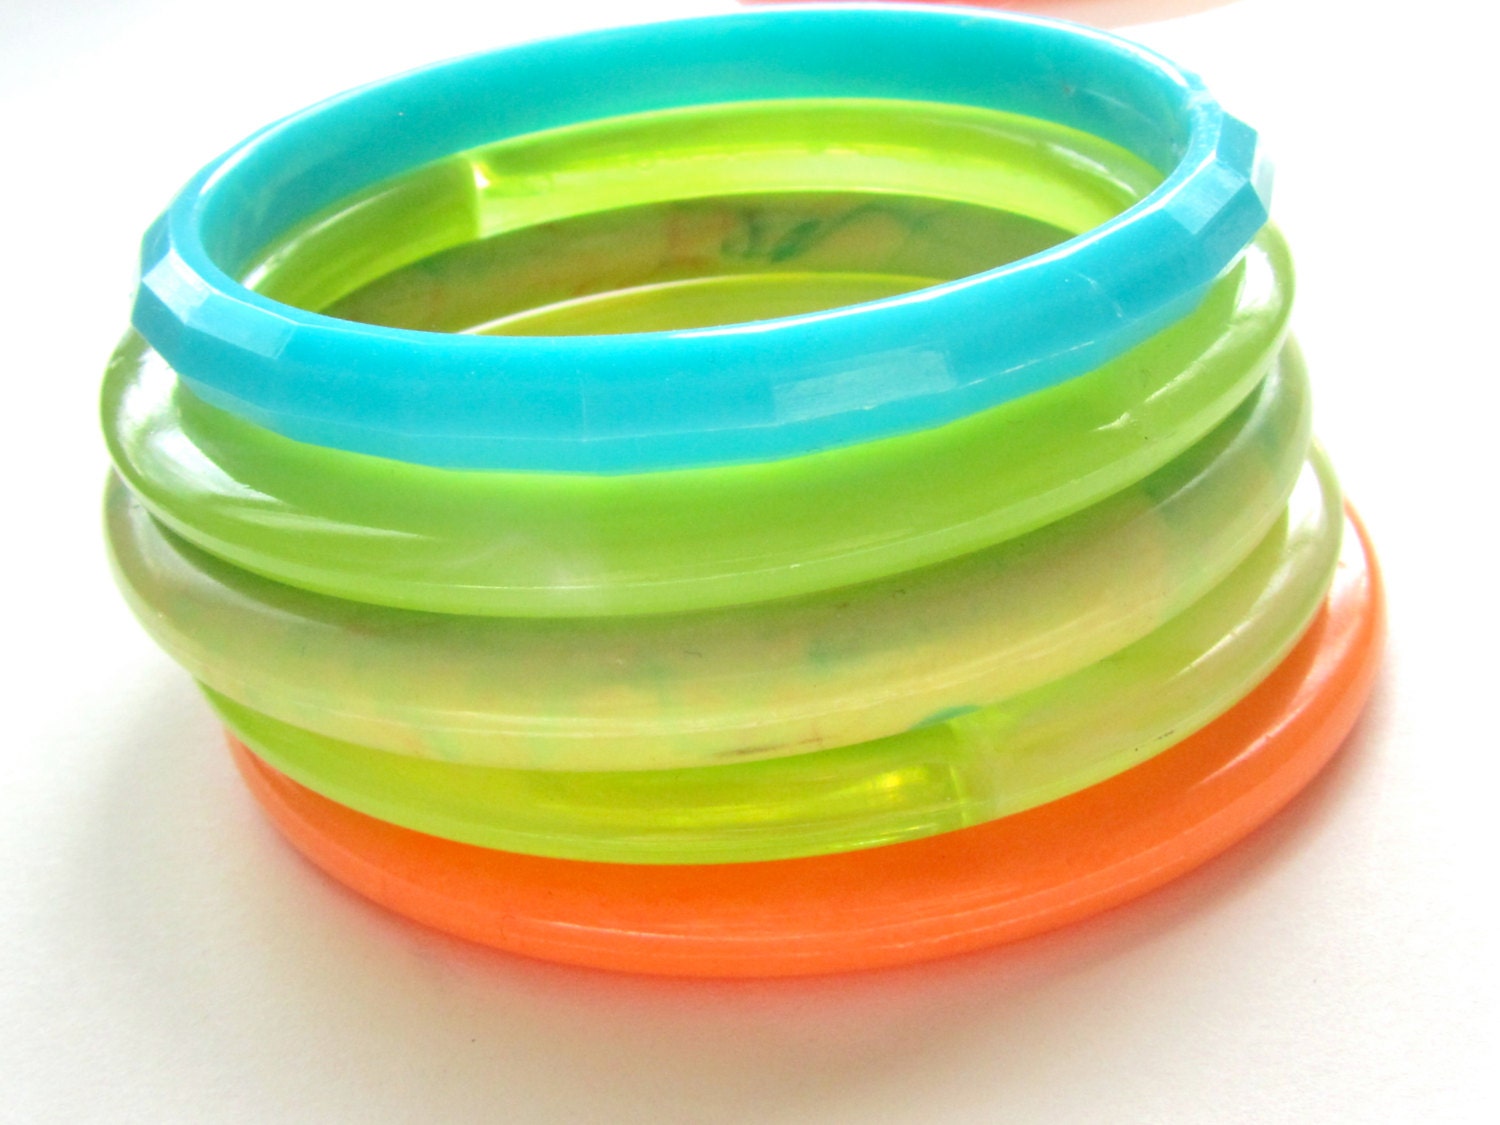 Vintage Beach Bangle Stack - plastic bracelets in summer colors - aqua, neon mint, marbled green, coral orange - stacking jewelry set - lindalinda